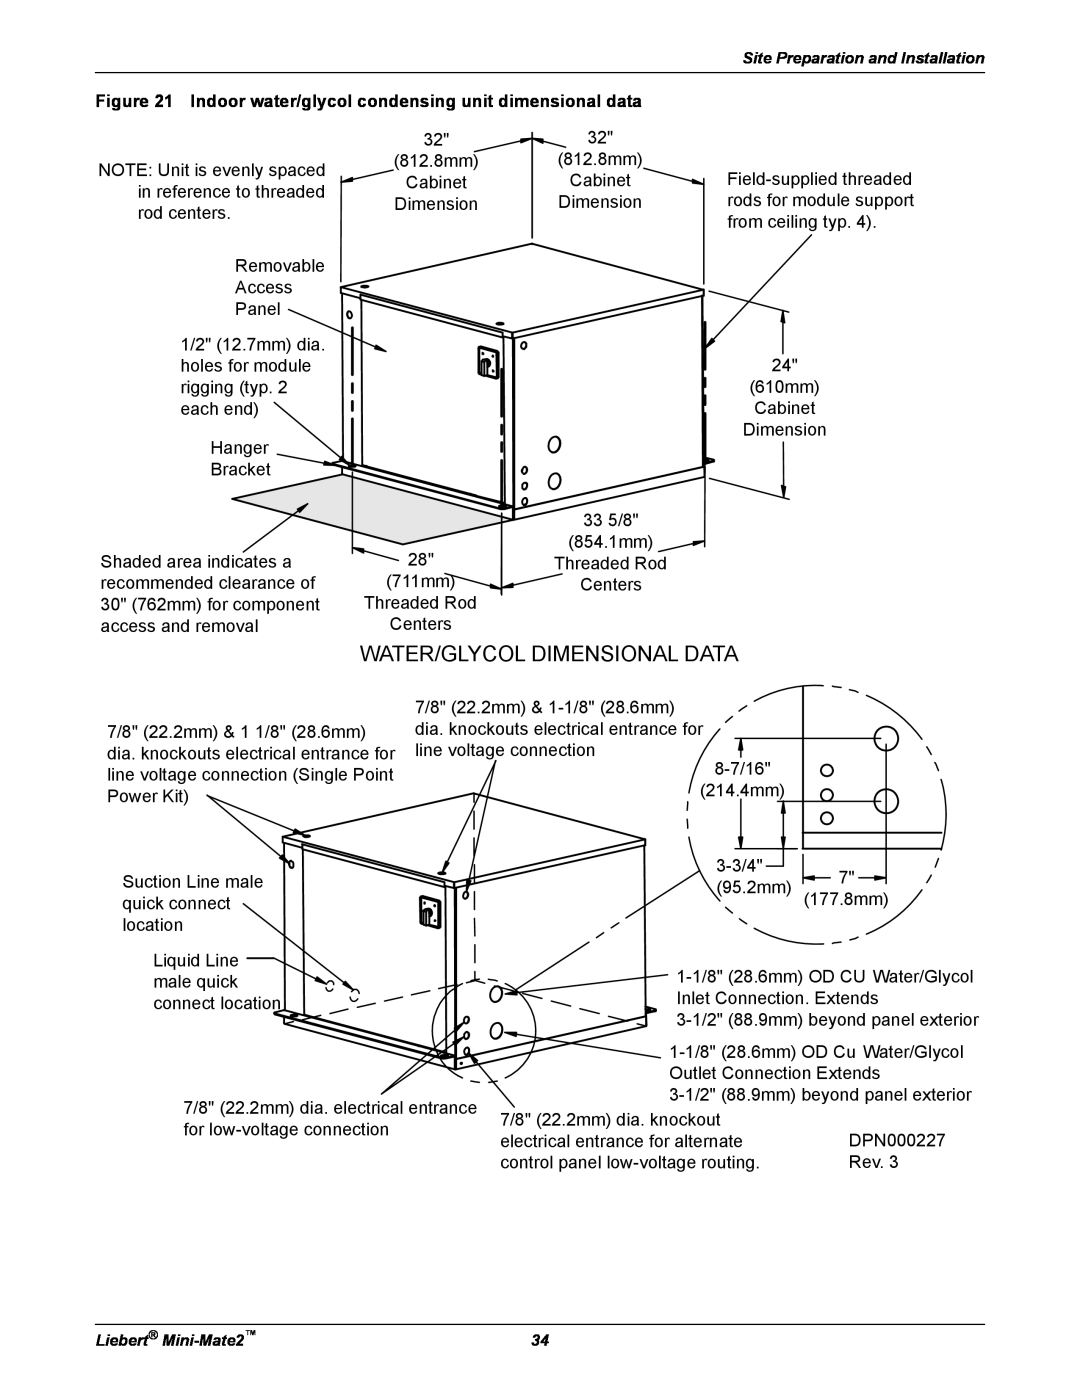 Emerson MINI-MATE2 user manual Water/Glycol Dimensional Data 